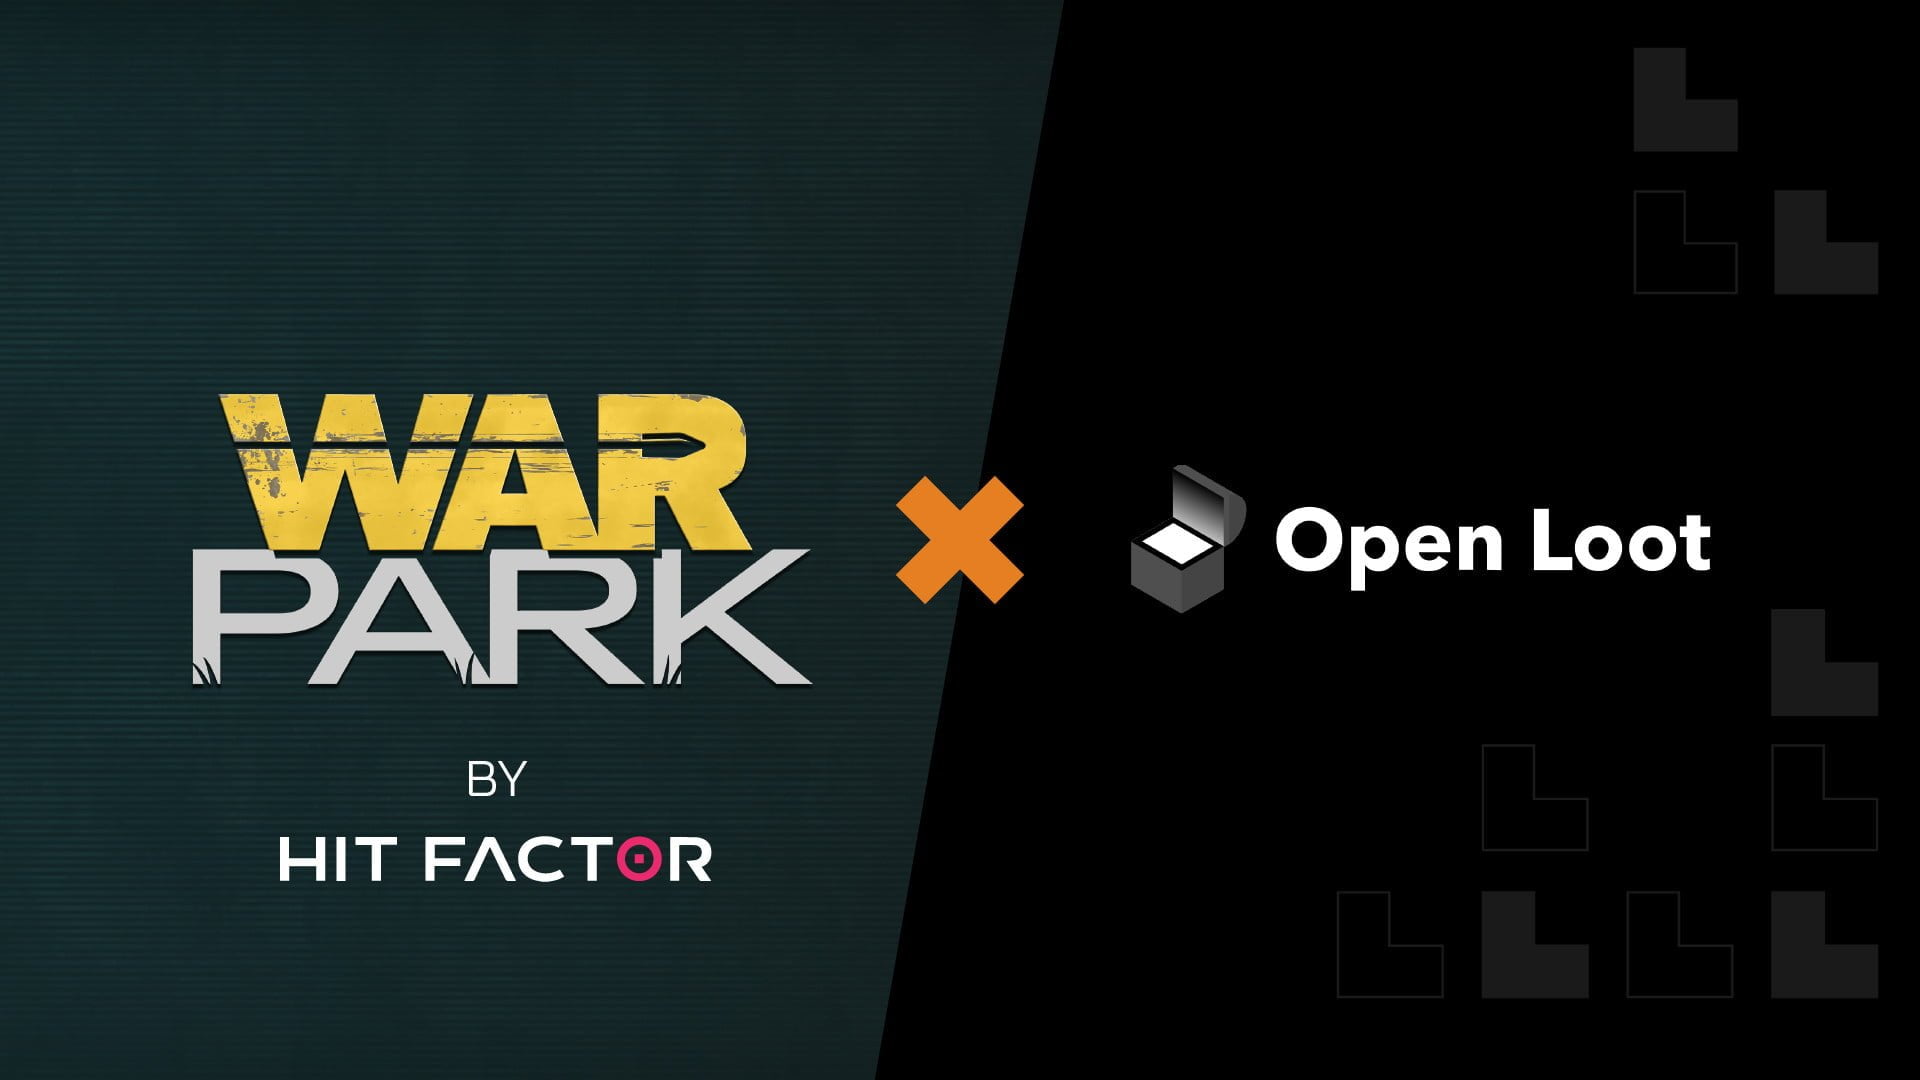 Open Loot Announces partnership with Hit Factor’s War Park 4